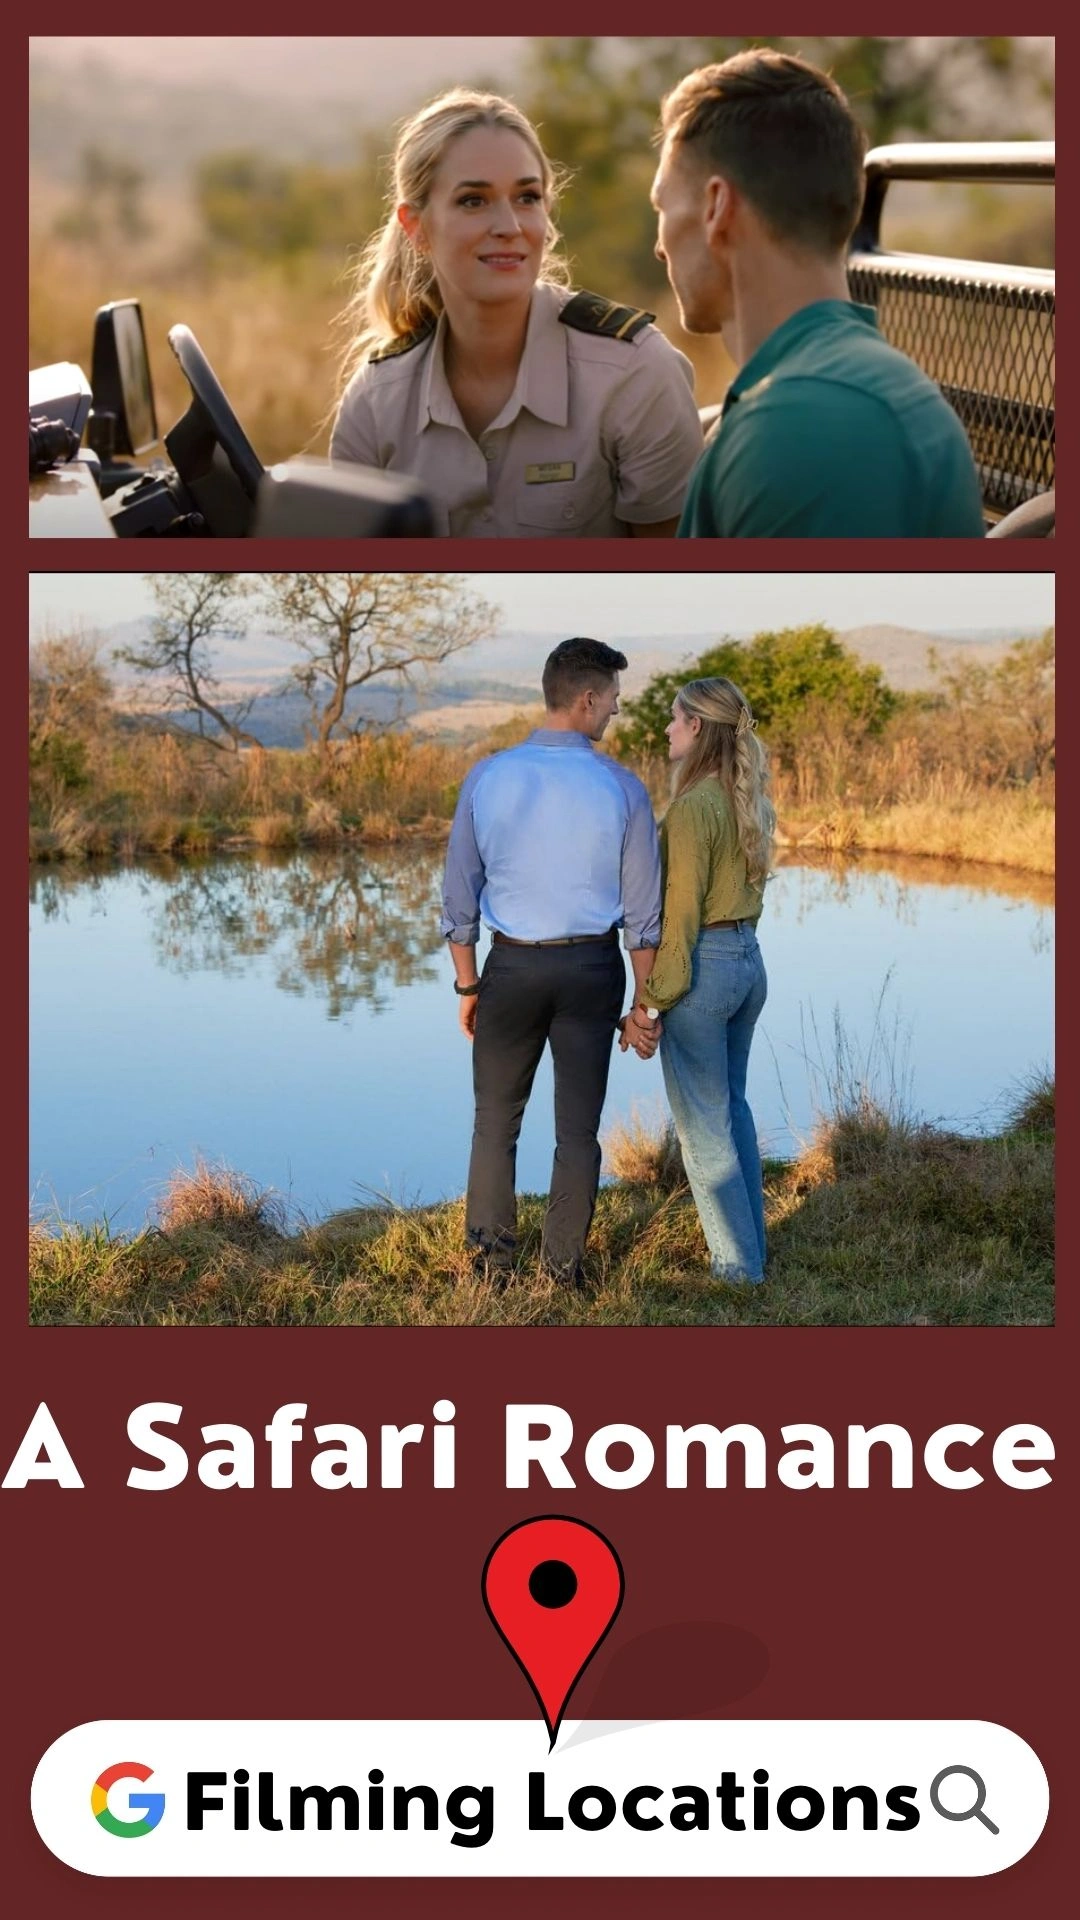 A Safari Romance Filming Locations